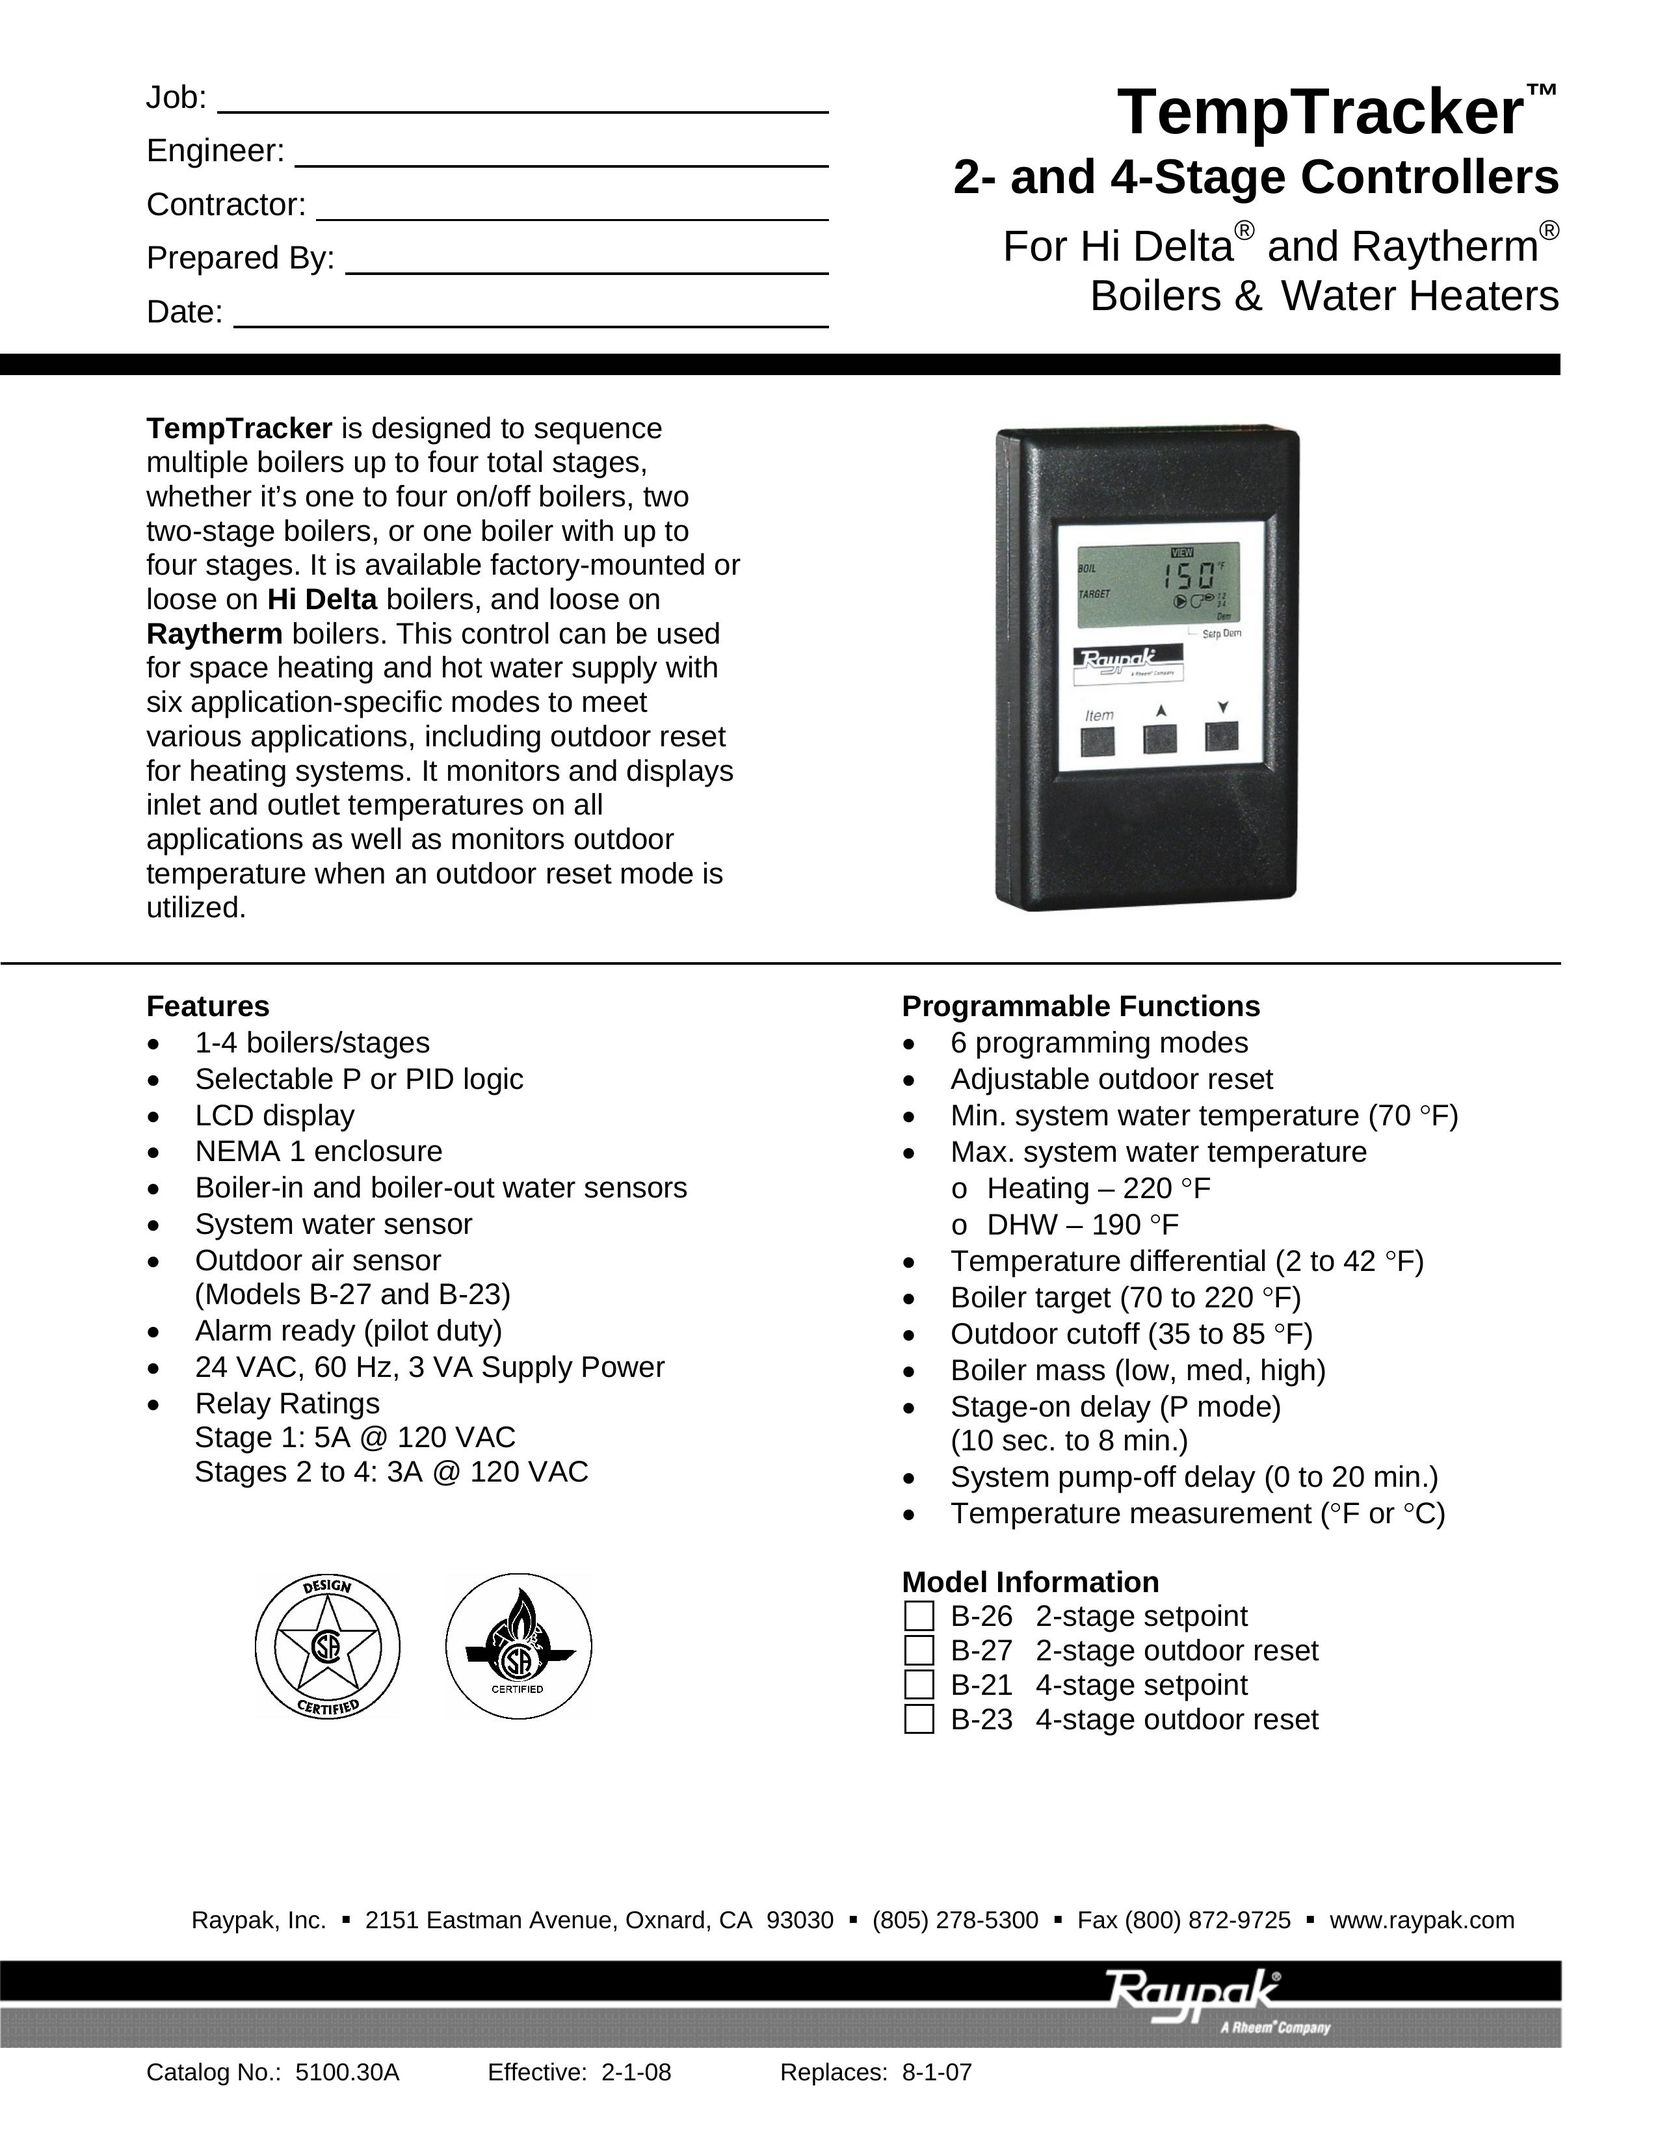 Raypak B-23 Switch User Manual